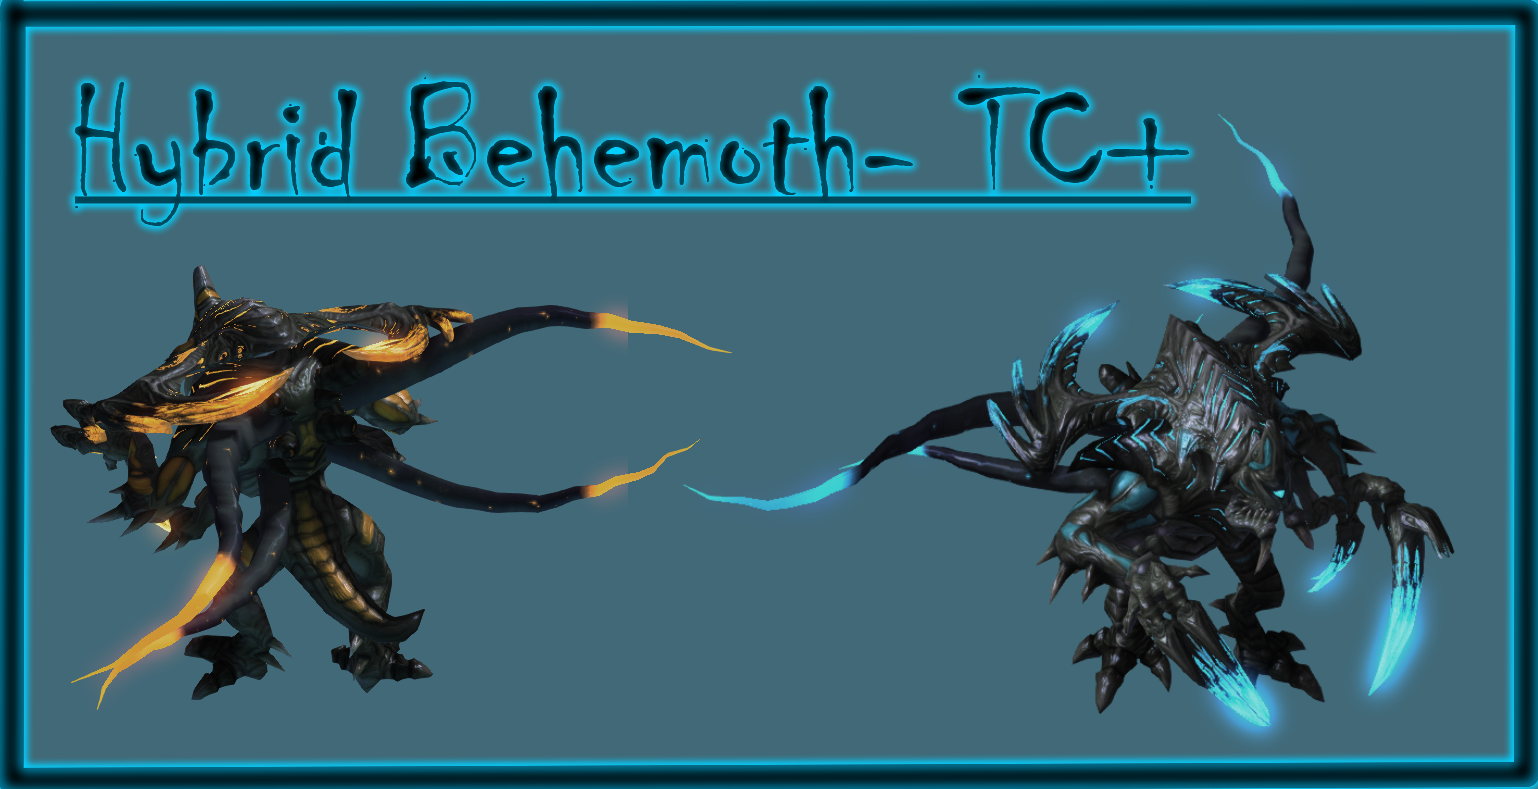 Hybrid Behemoth TC+